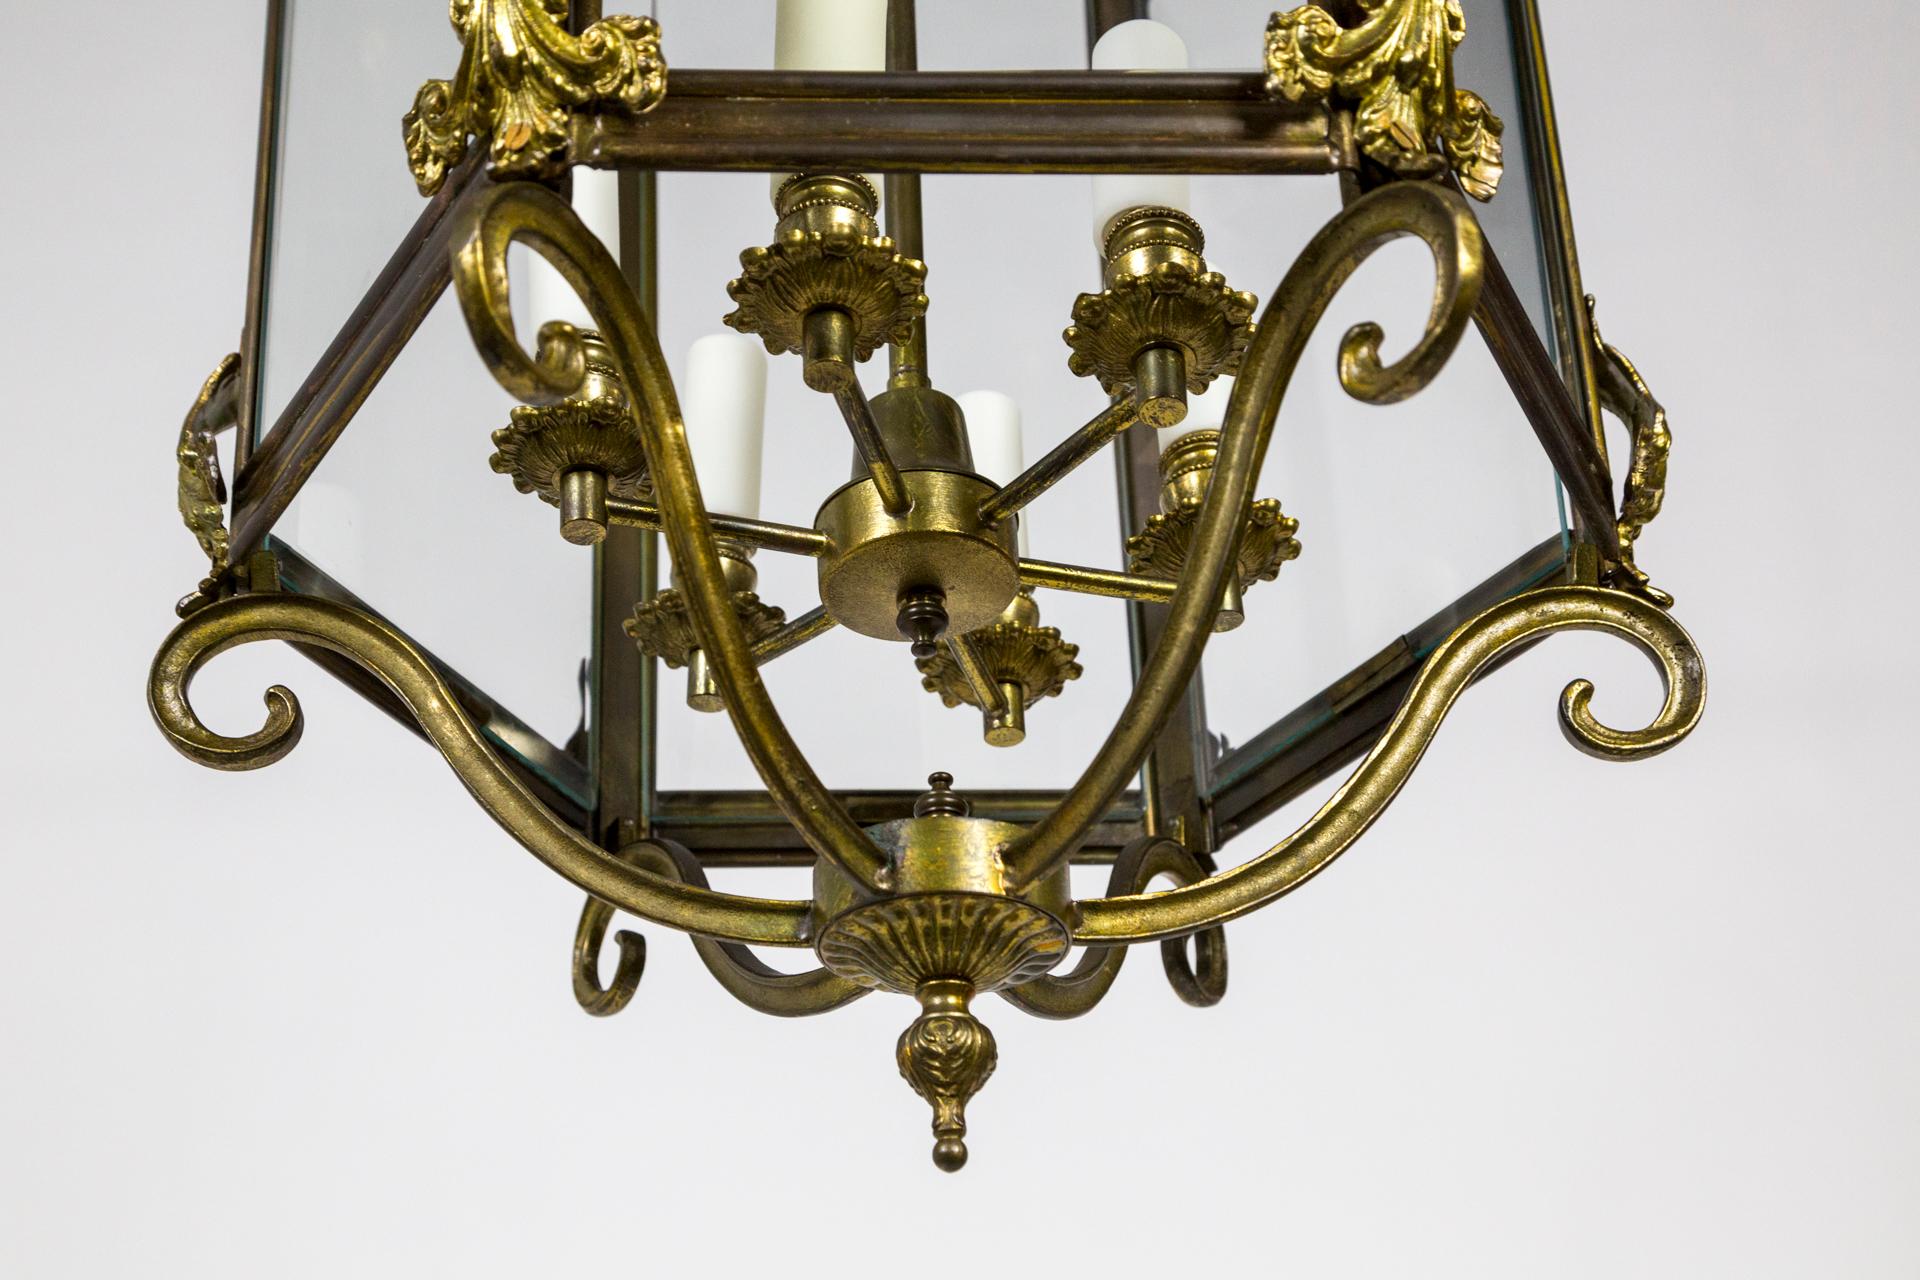 Large Regency 6 Panel Brass Lantern w/ Scrolls Acanthus Leaves For Sale 1